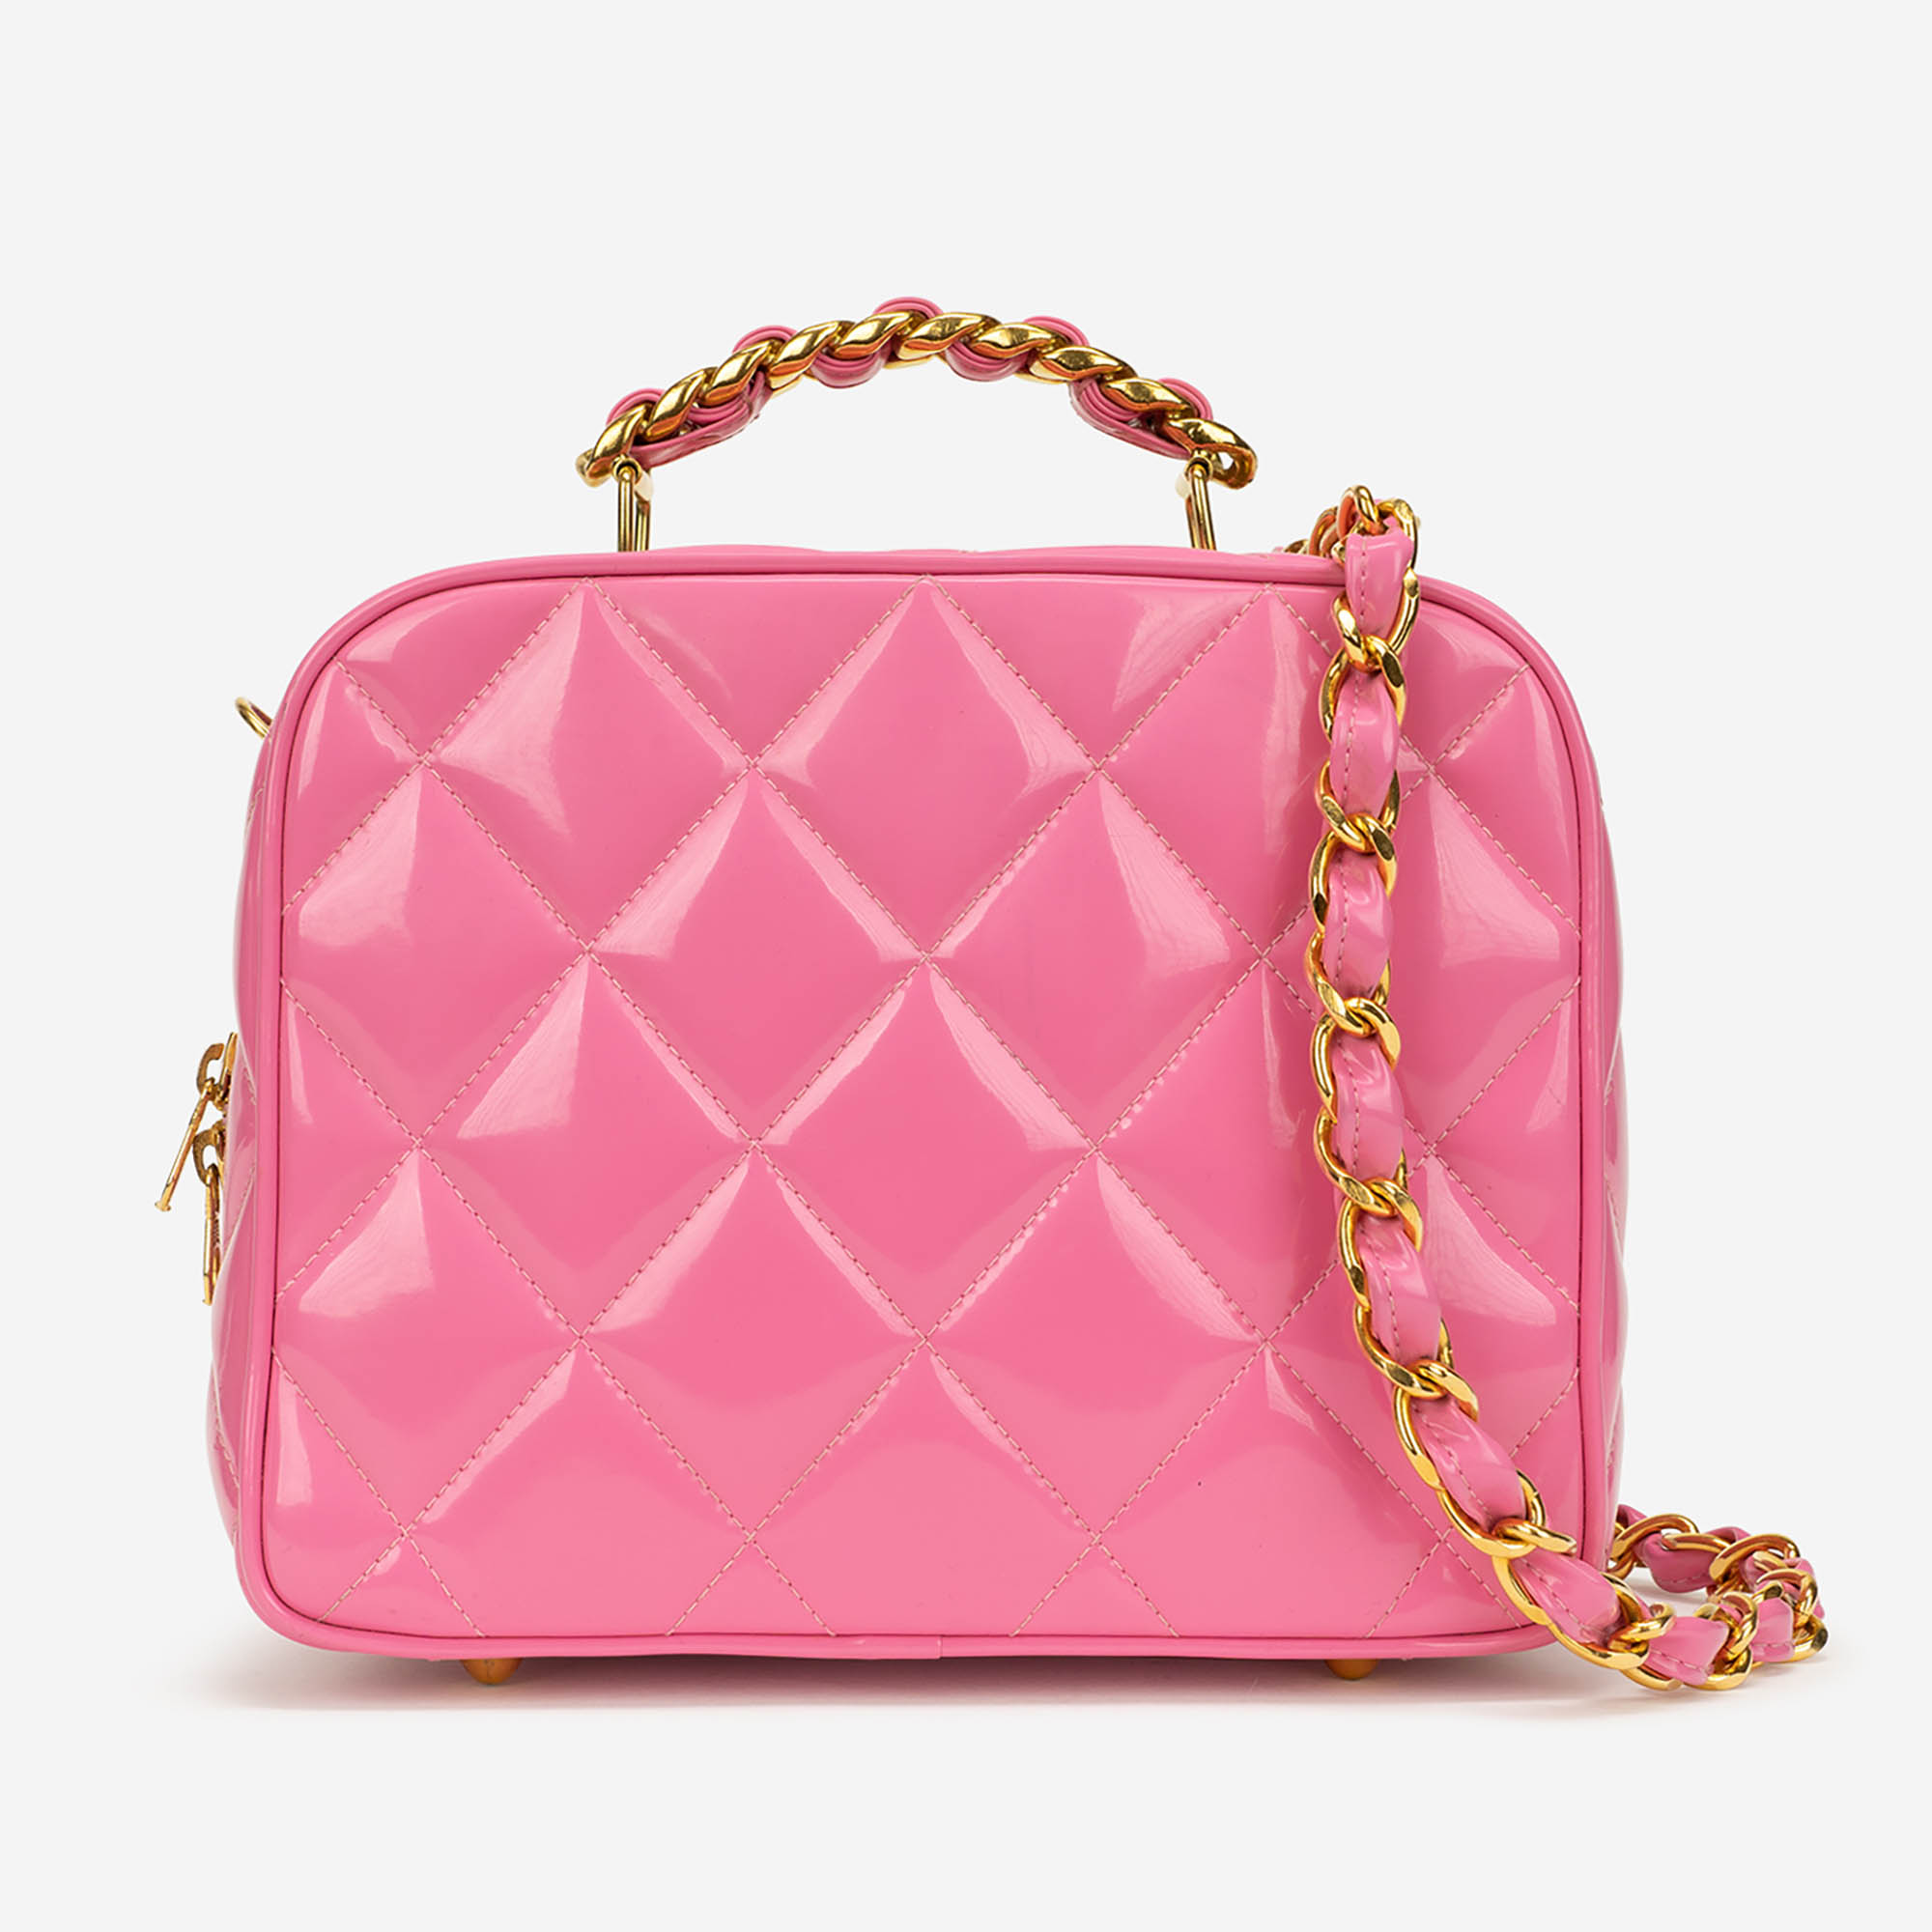 Top 10 Rare Chanel Bags - luxfy